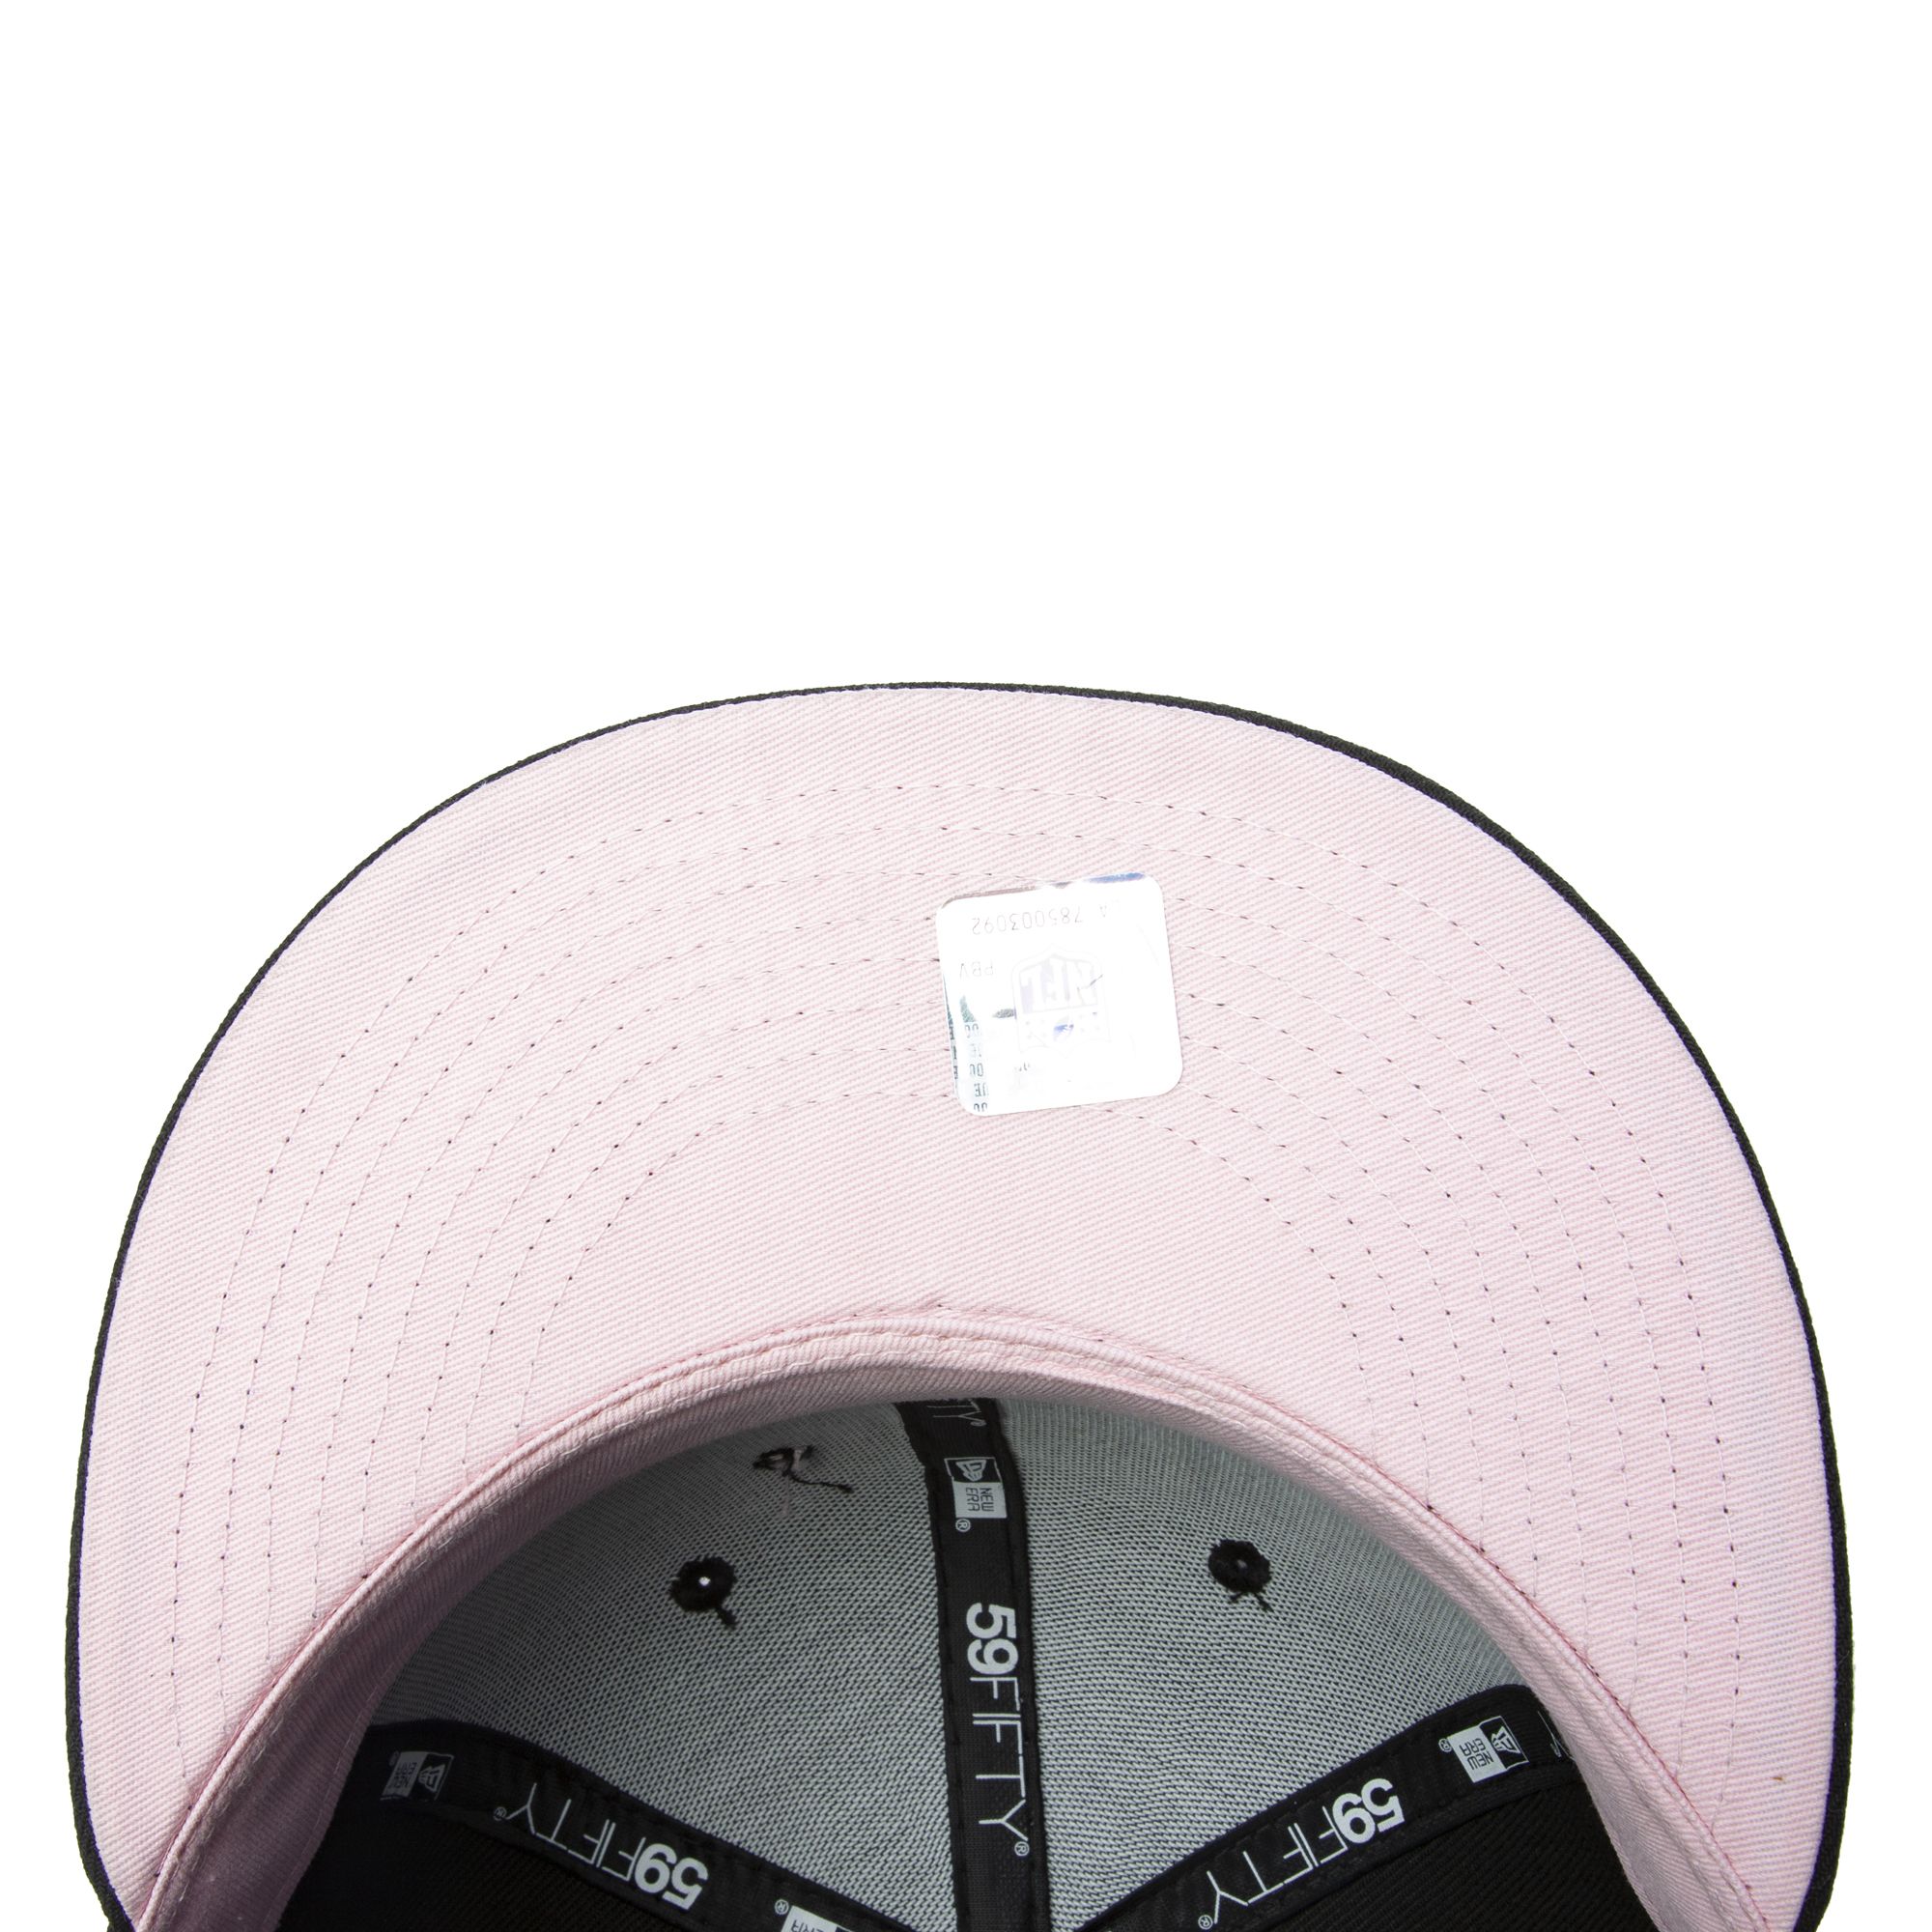 Buy the 59FIFTY cap from Las Vegas Raiders - Brooklyn Fizz